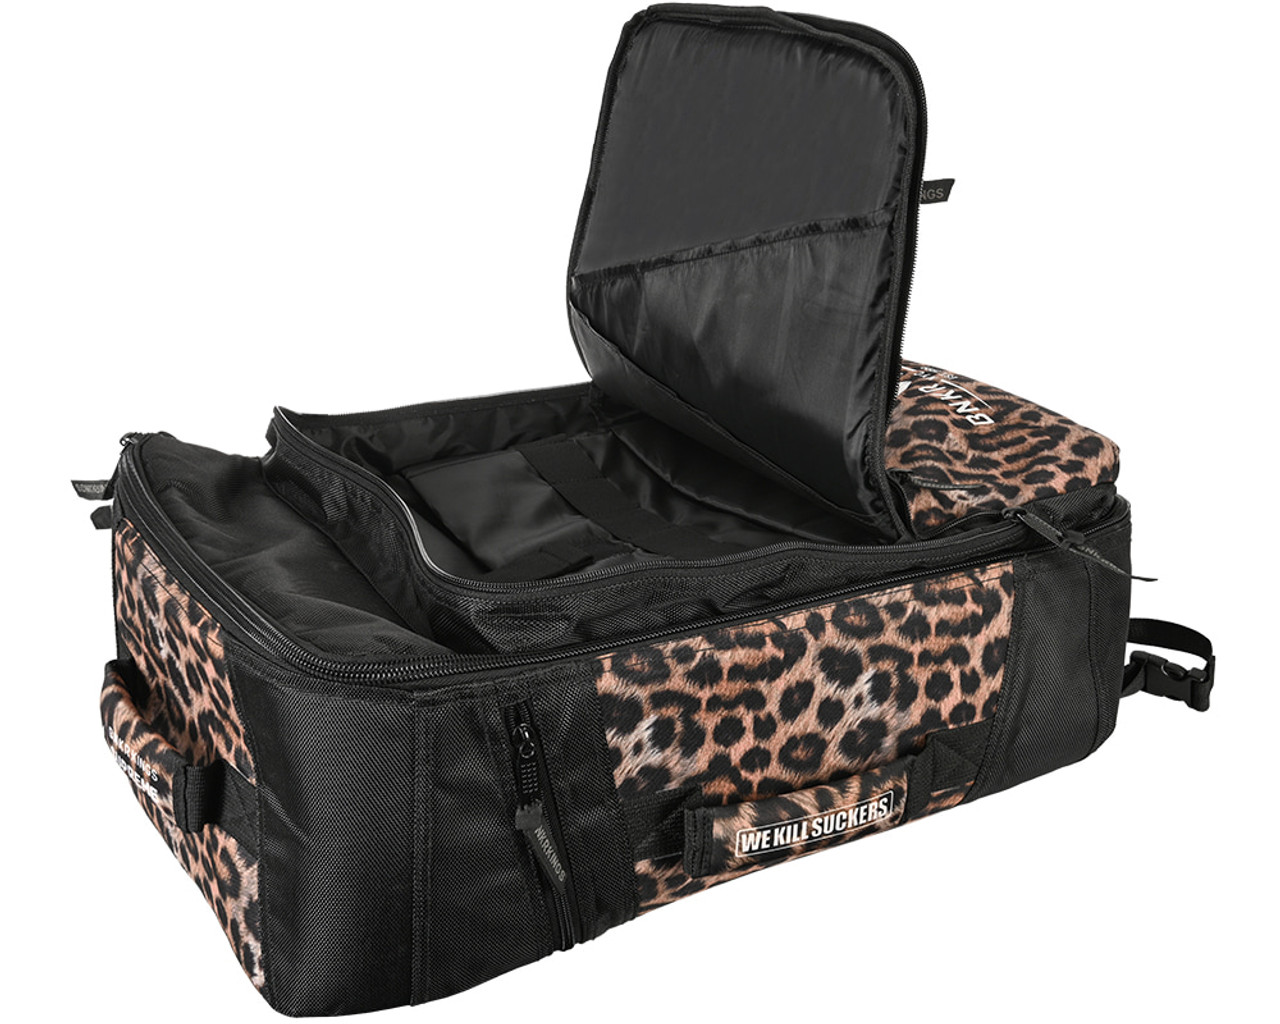 Bunkerkings Supreme Gear Backpack - Leopard –